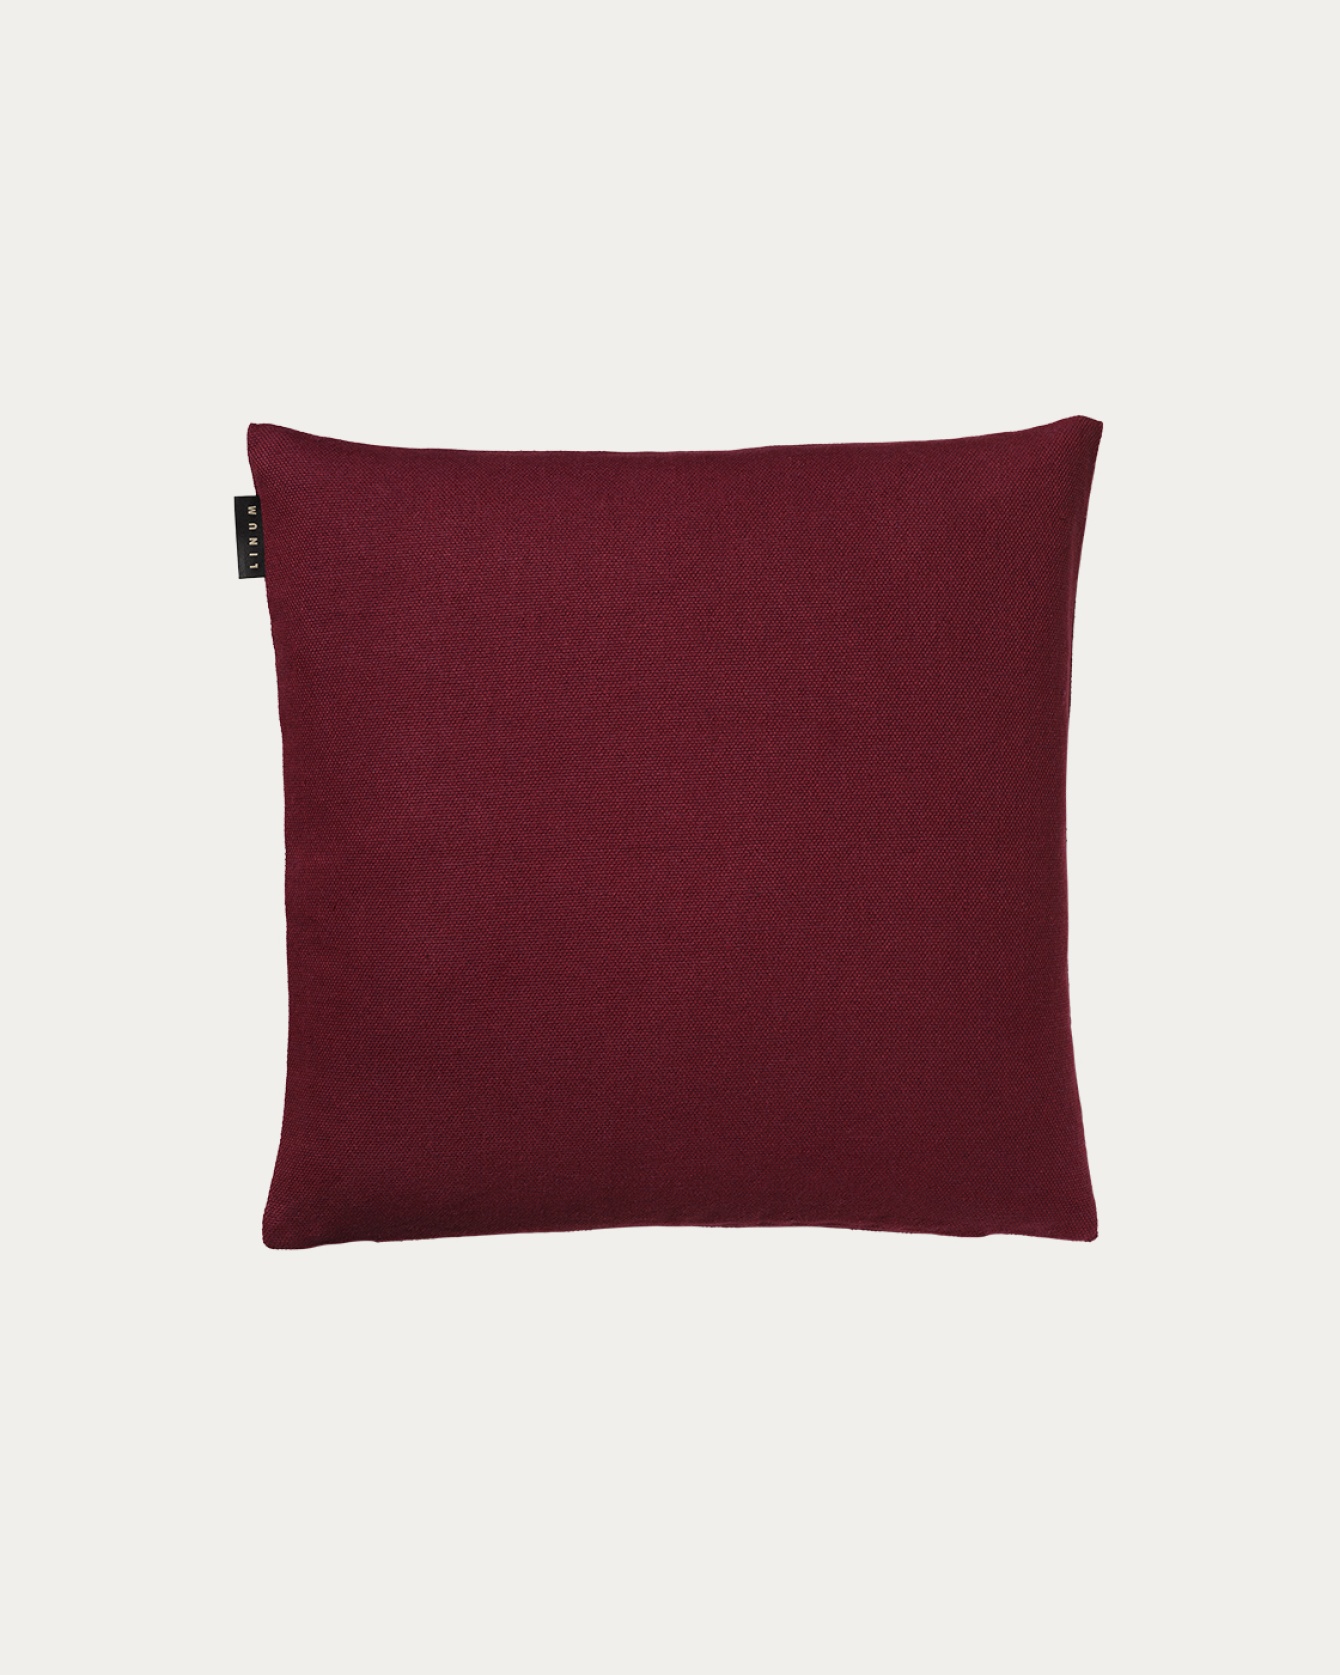 PEPPER Cushion cover 40x40 cm Burgundy red